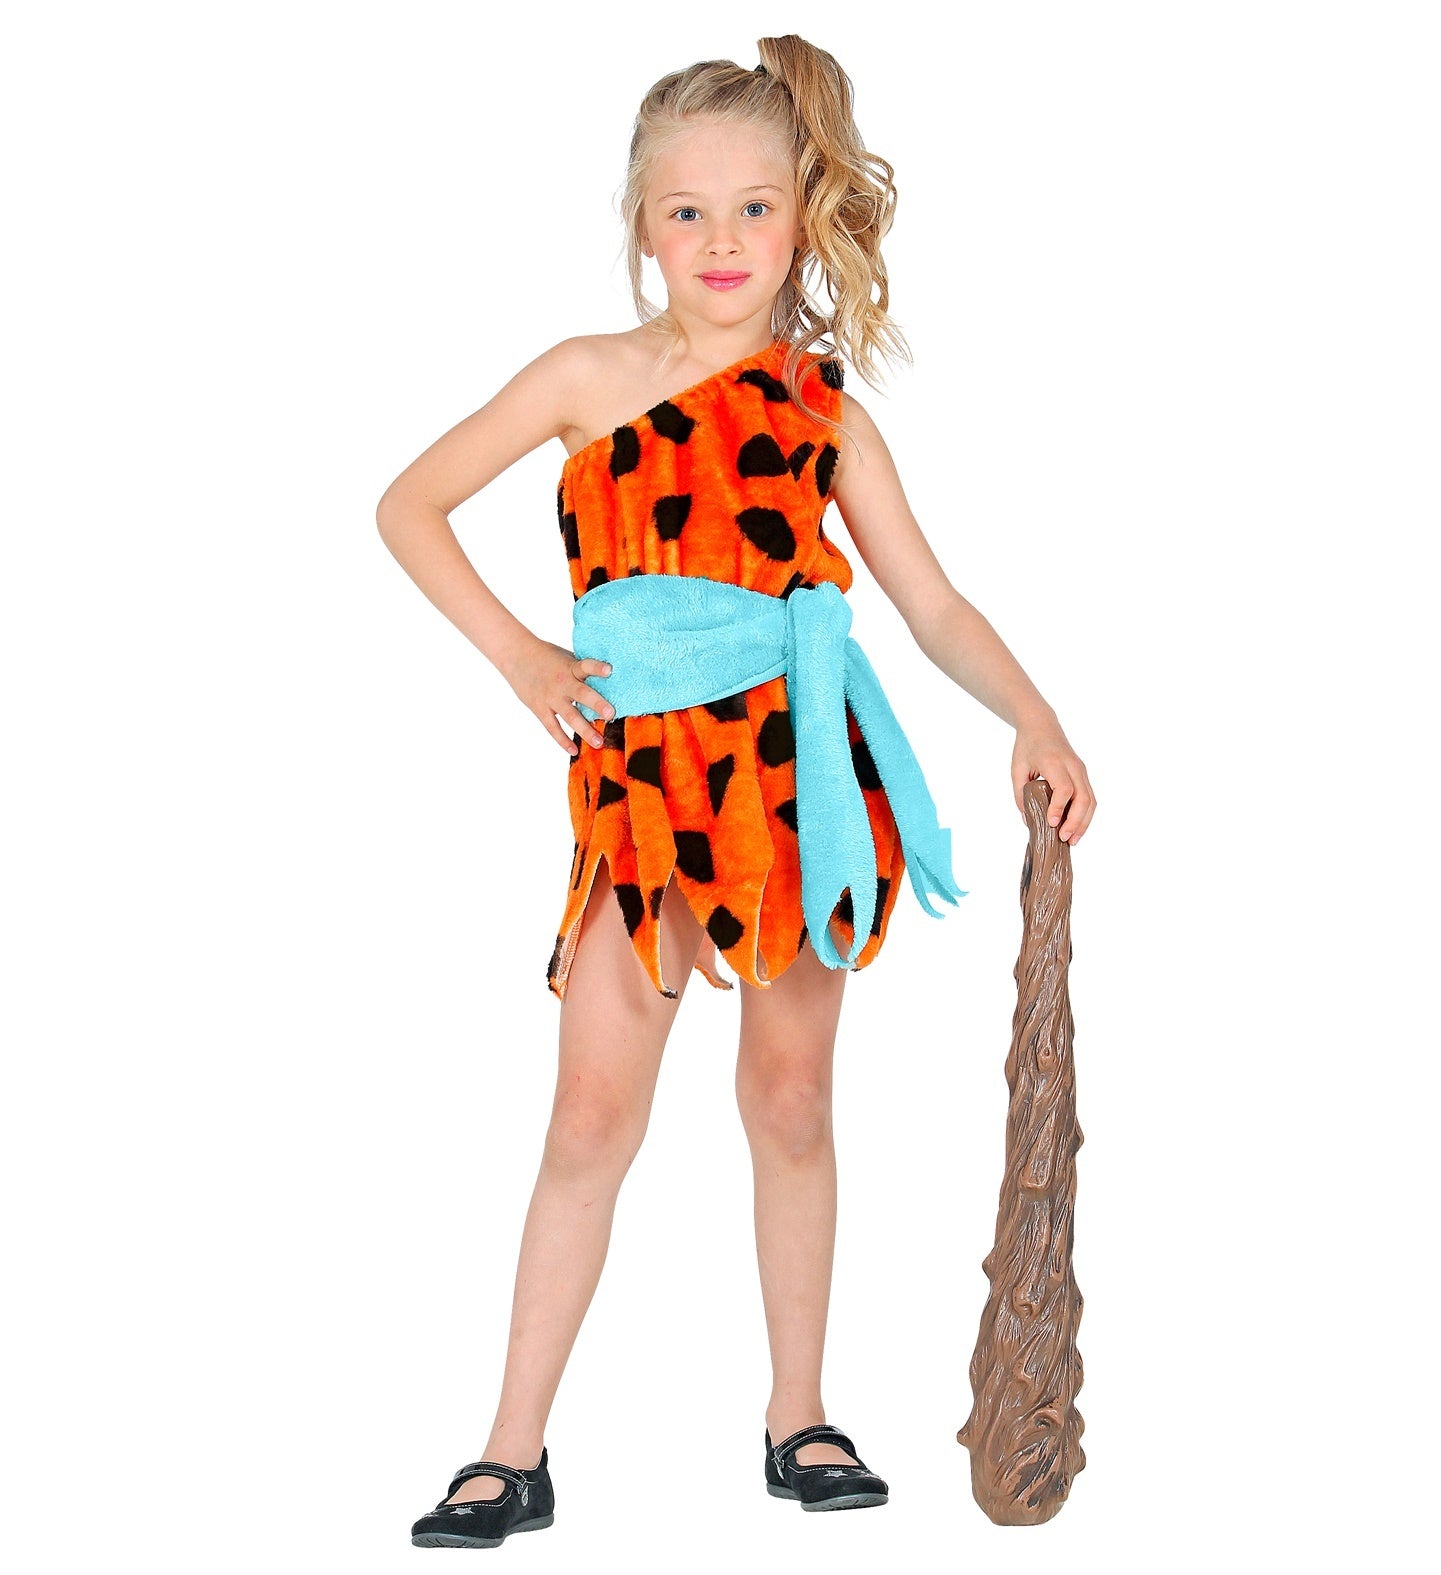 Widmann - The Flintstones Kostuum - Pebbles Flinsteen - Meisje - blauw,oranje - Maat 128 - Carnavalskleding - Verkleedkleding